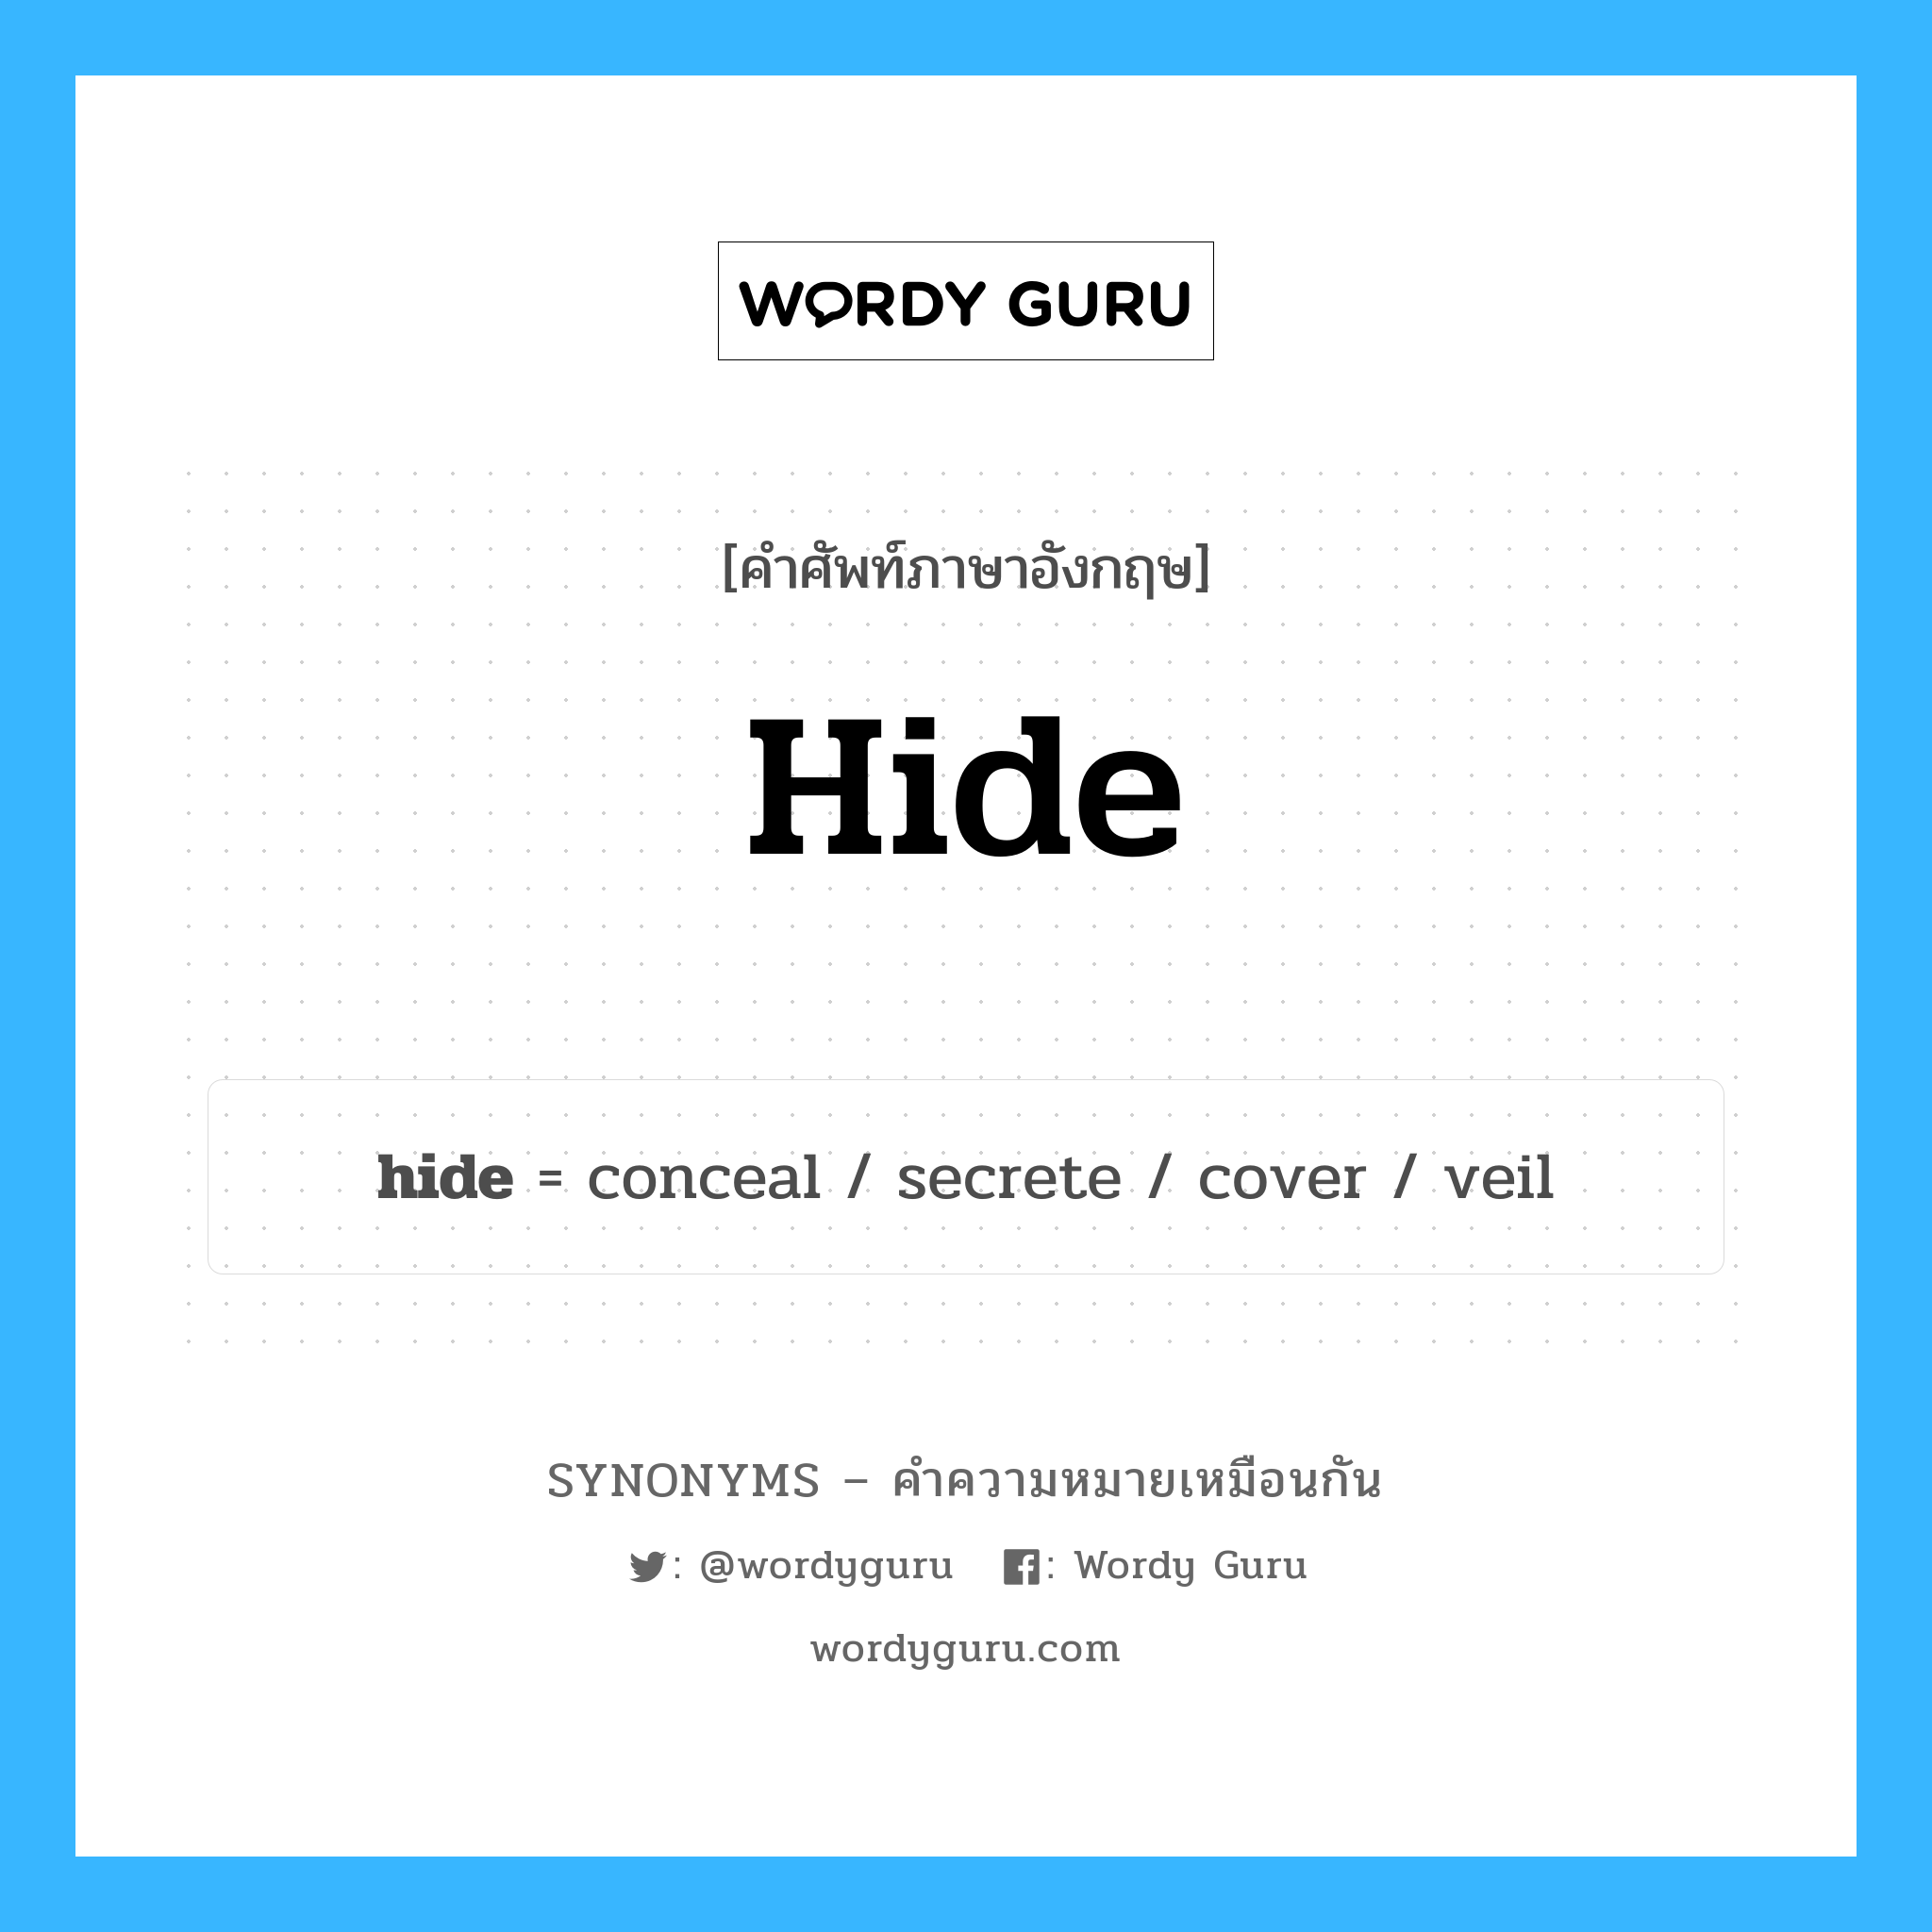 secrete เป็นหนึ่งใน hide และมีคำอื่น ๆ อีกดังนี้, คำศัพท์ภาษาอังกฤษ secrete ความหมายคล้ายกันกับ hide แปลว่า หลั่ง หมวด hide